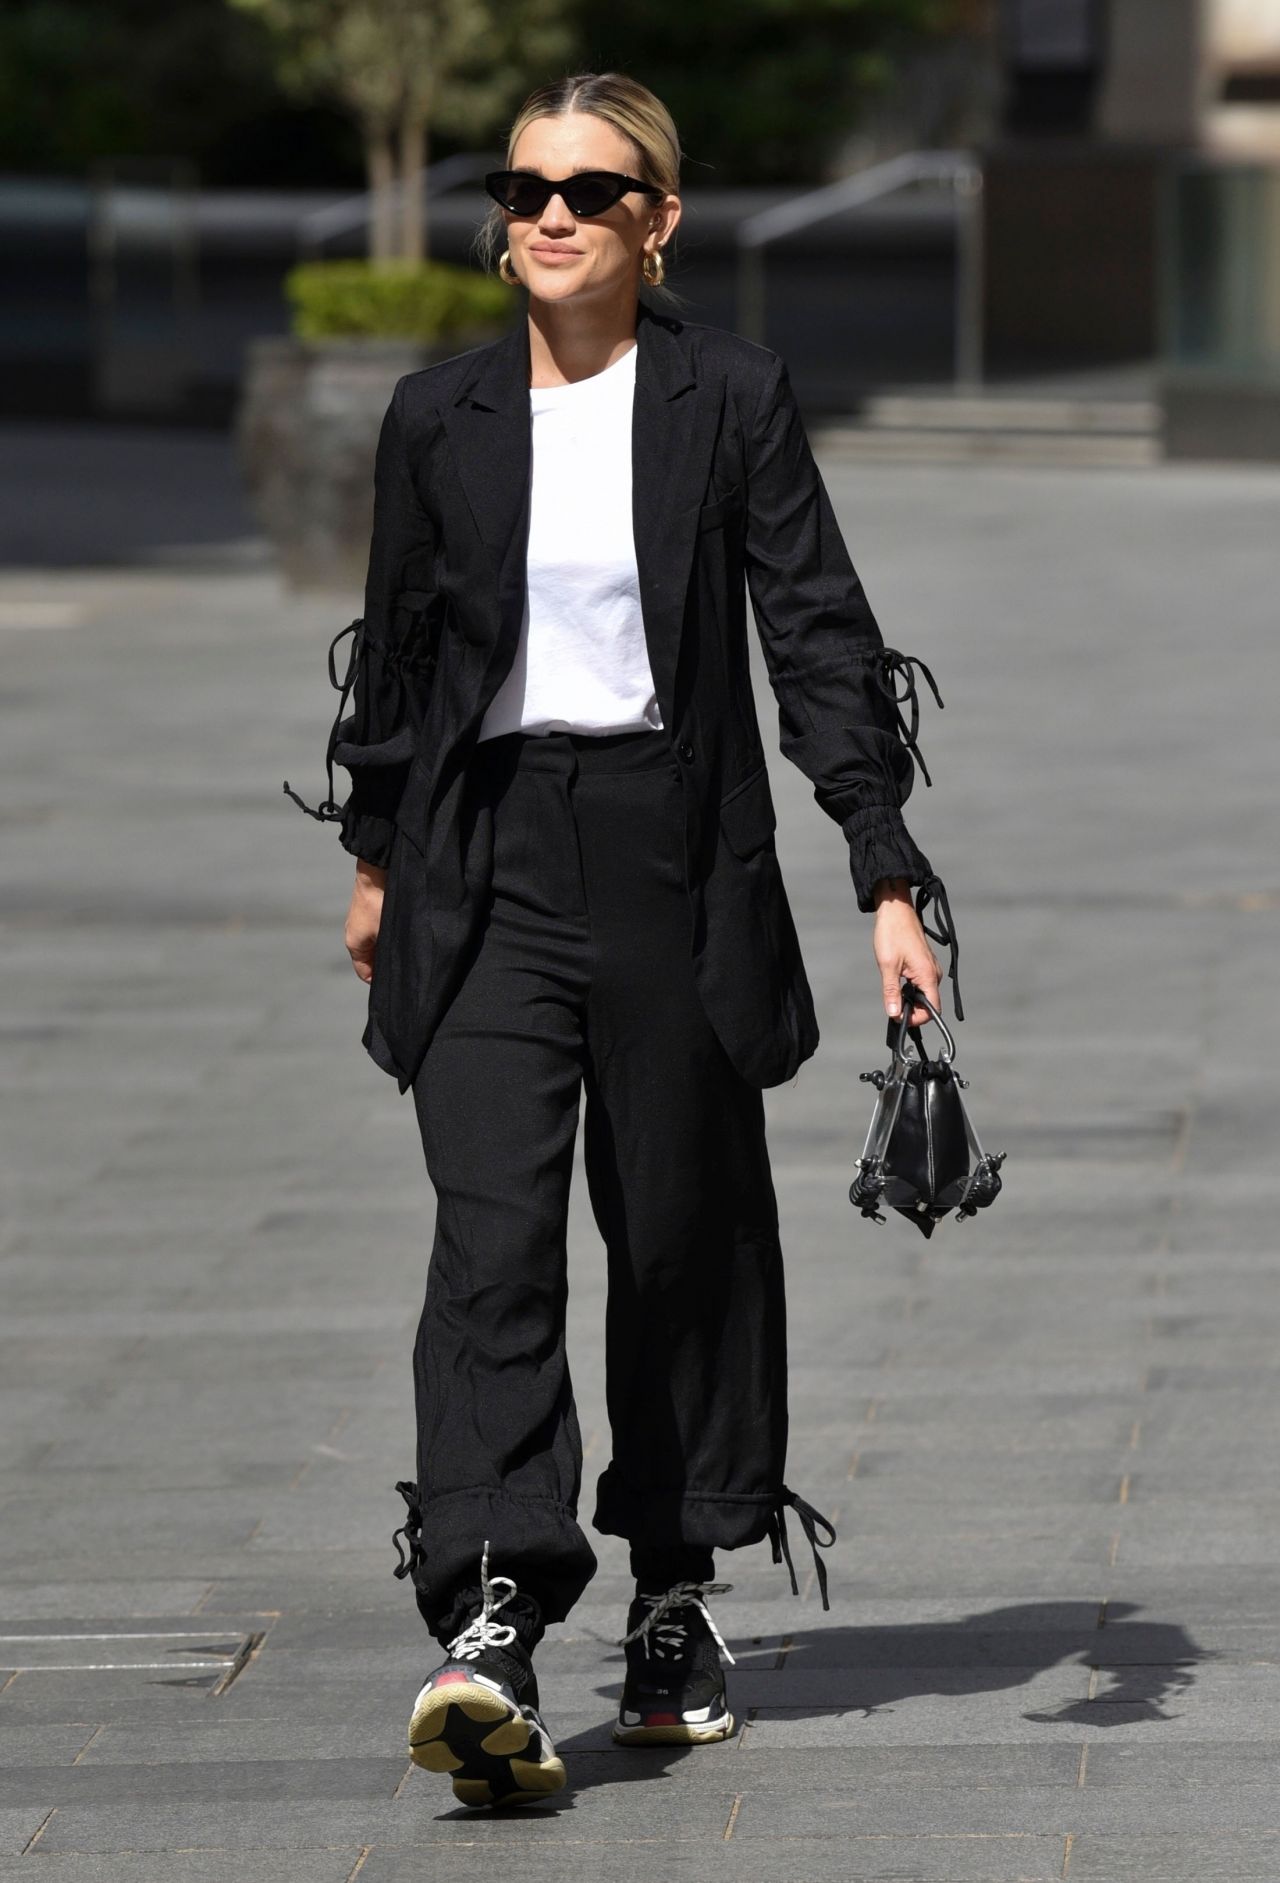 Ashley Roberts in Black Trouser Suit - Leaving the Global Studios in ...